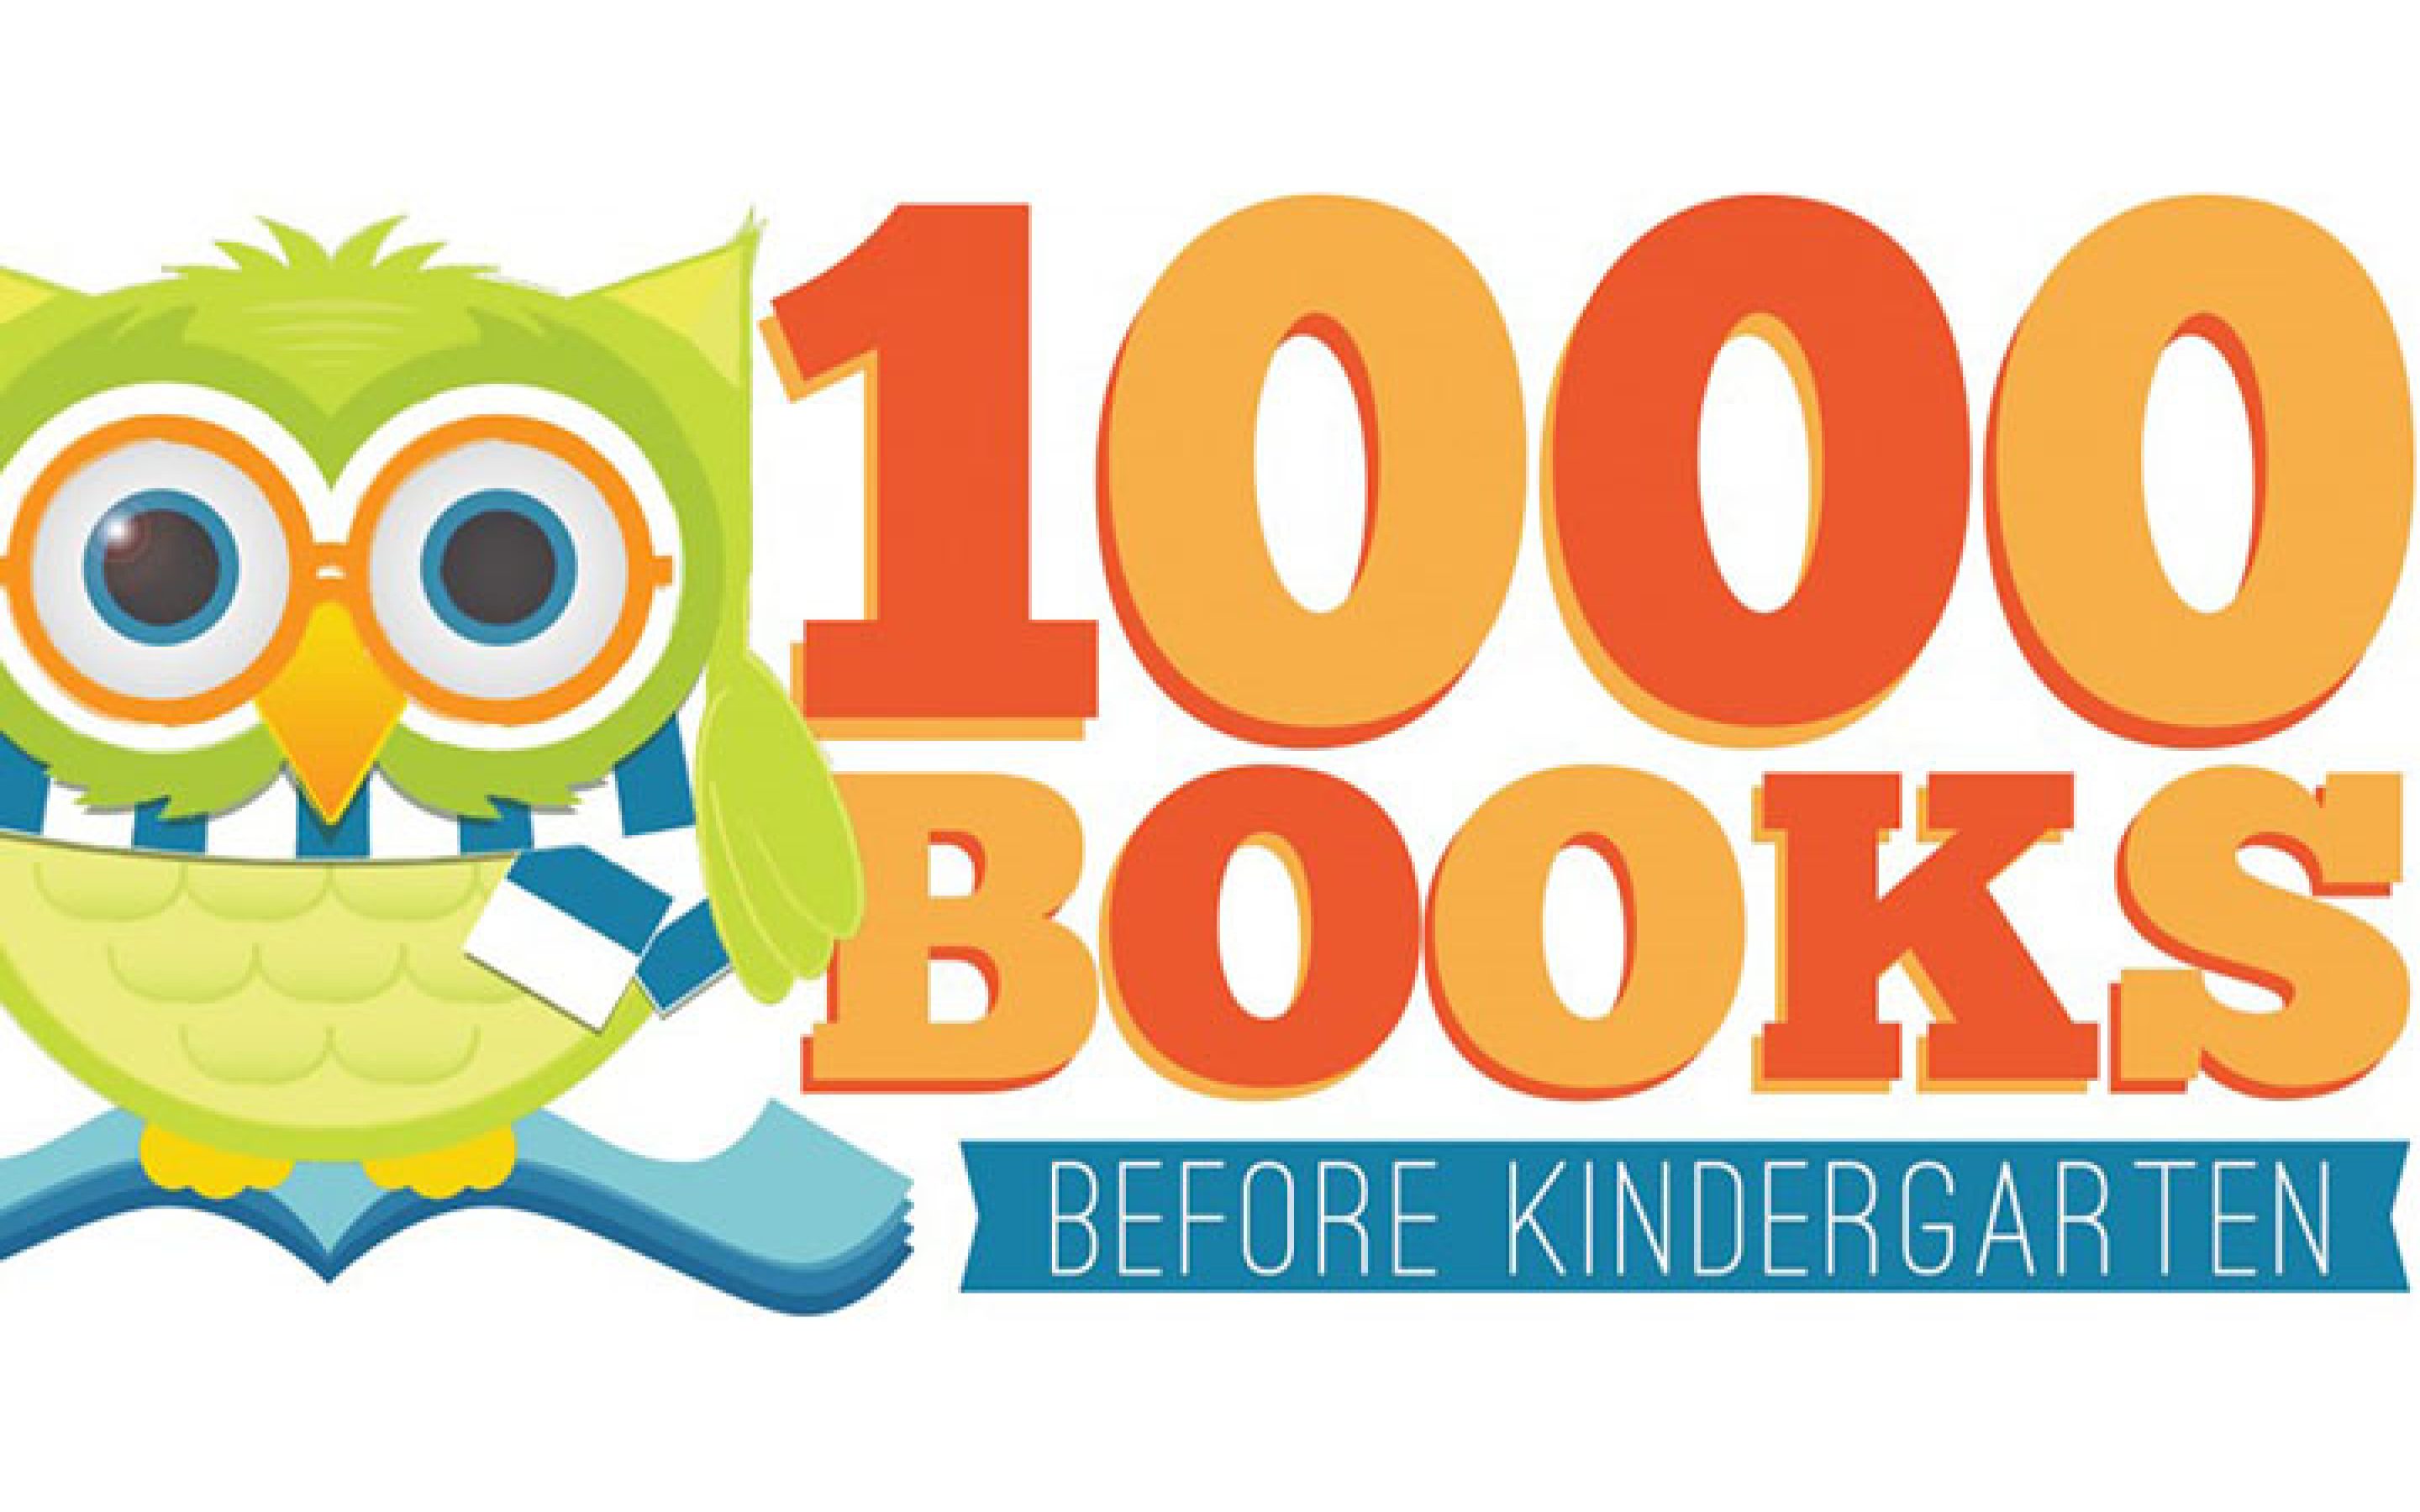 1,000 Books Before Kindergarten with Owl Logo